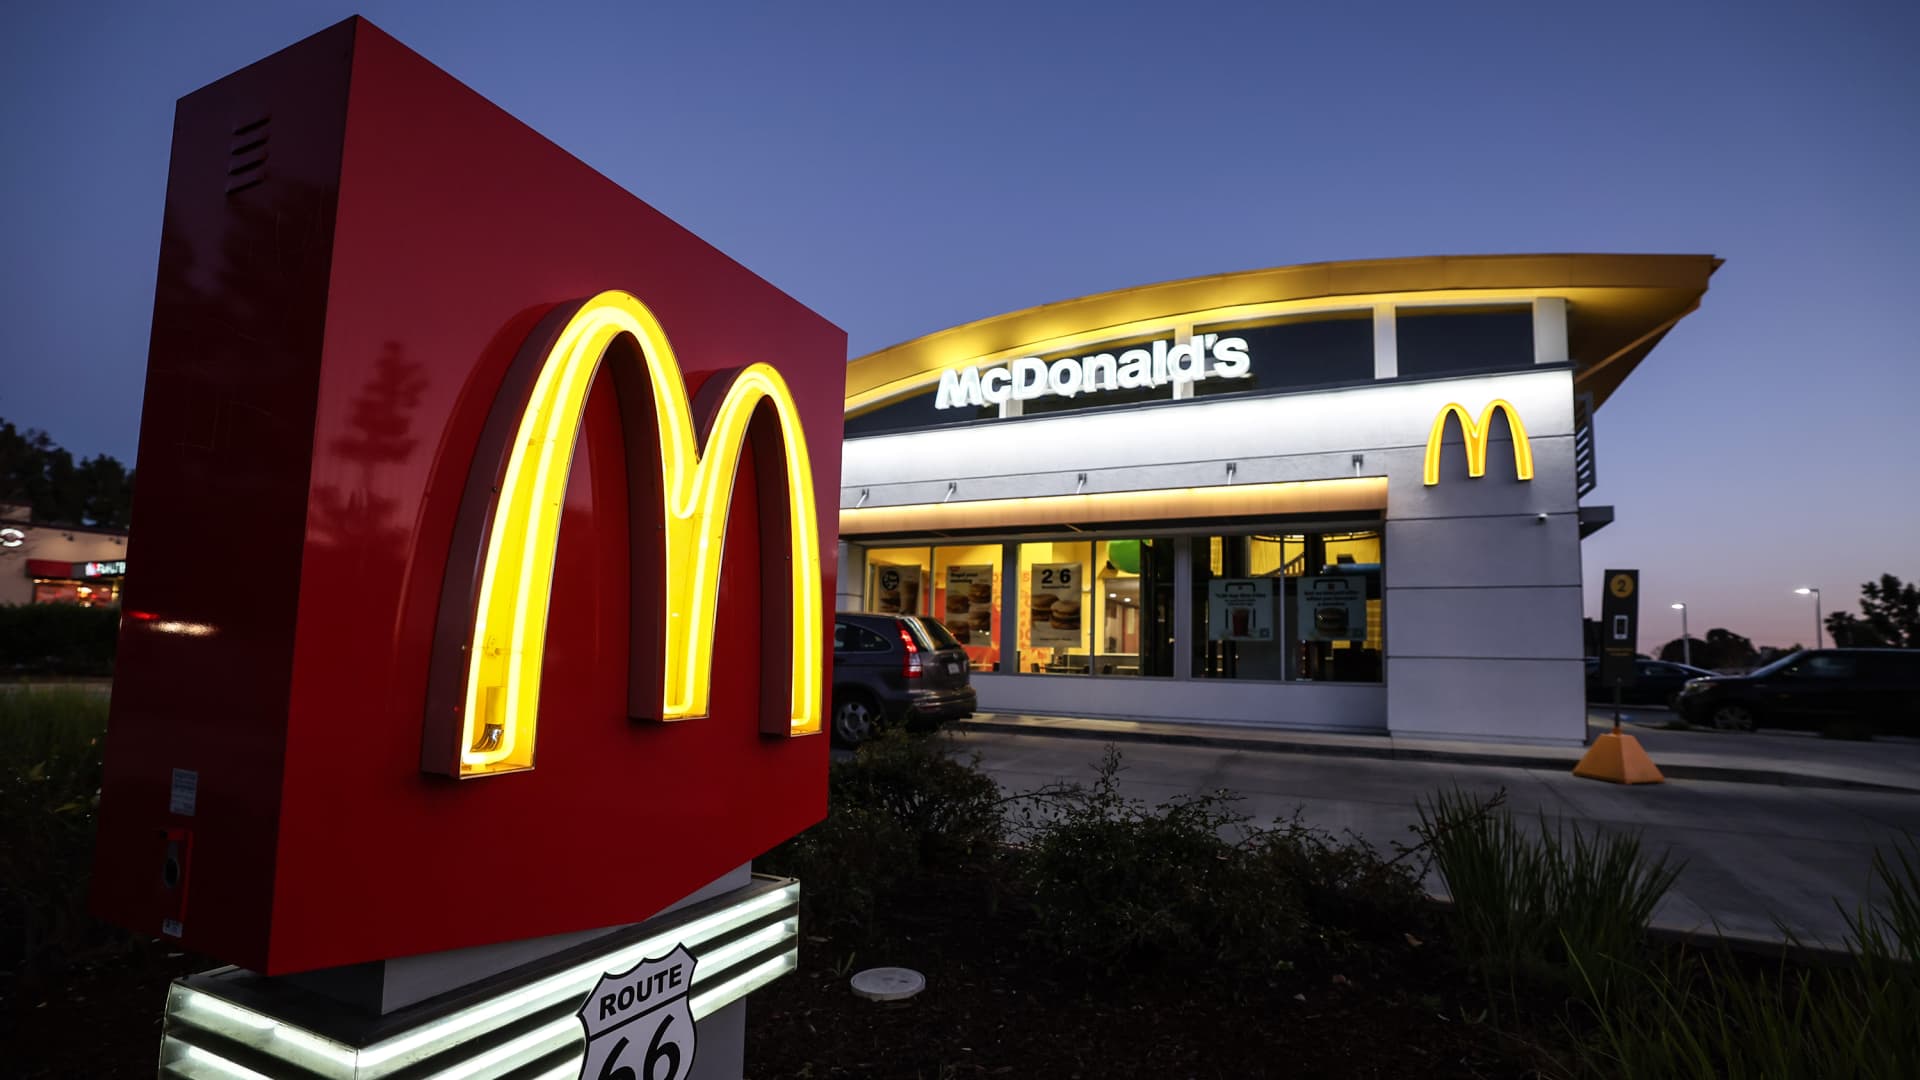 Long-predicted consumer pullback finally hits restaurants like Starbucks, KFC and McDonald's